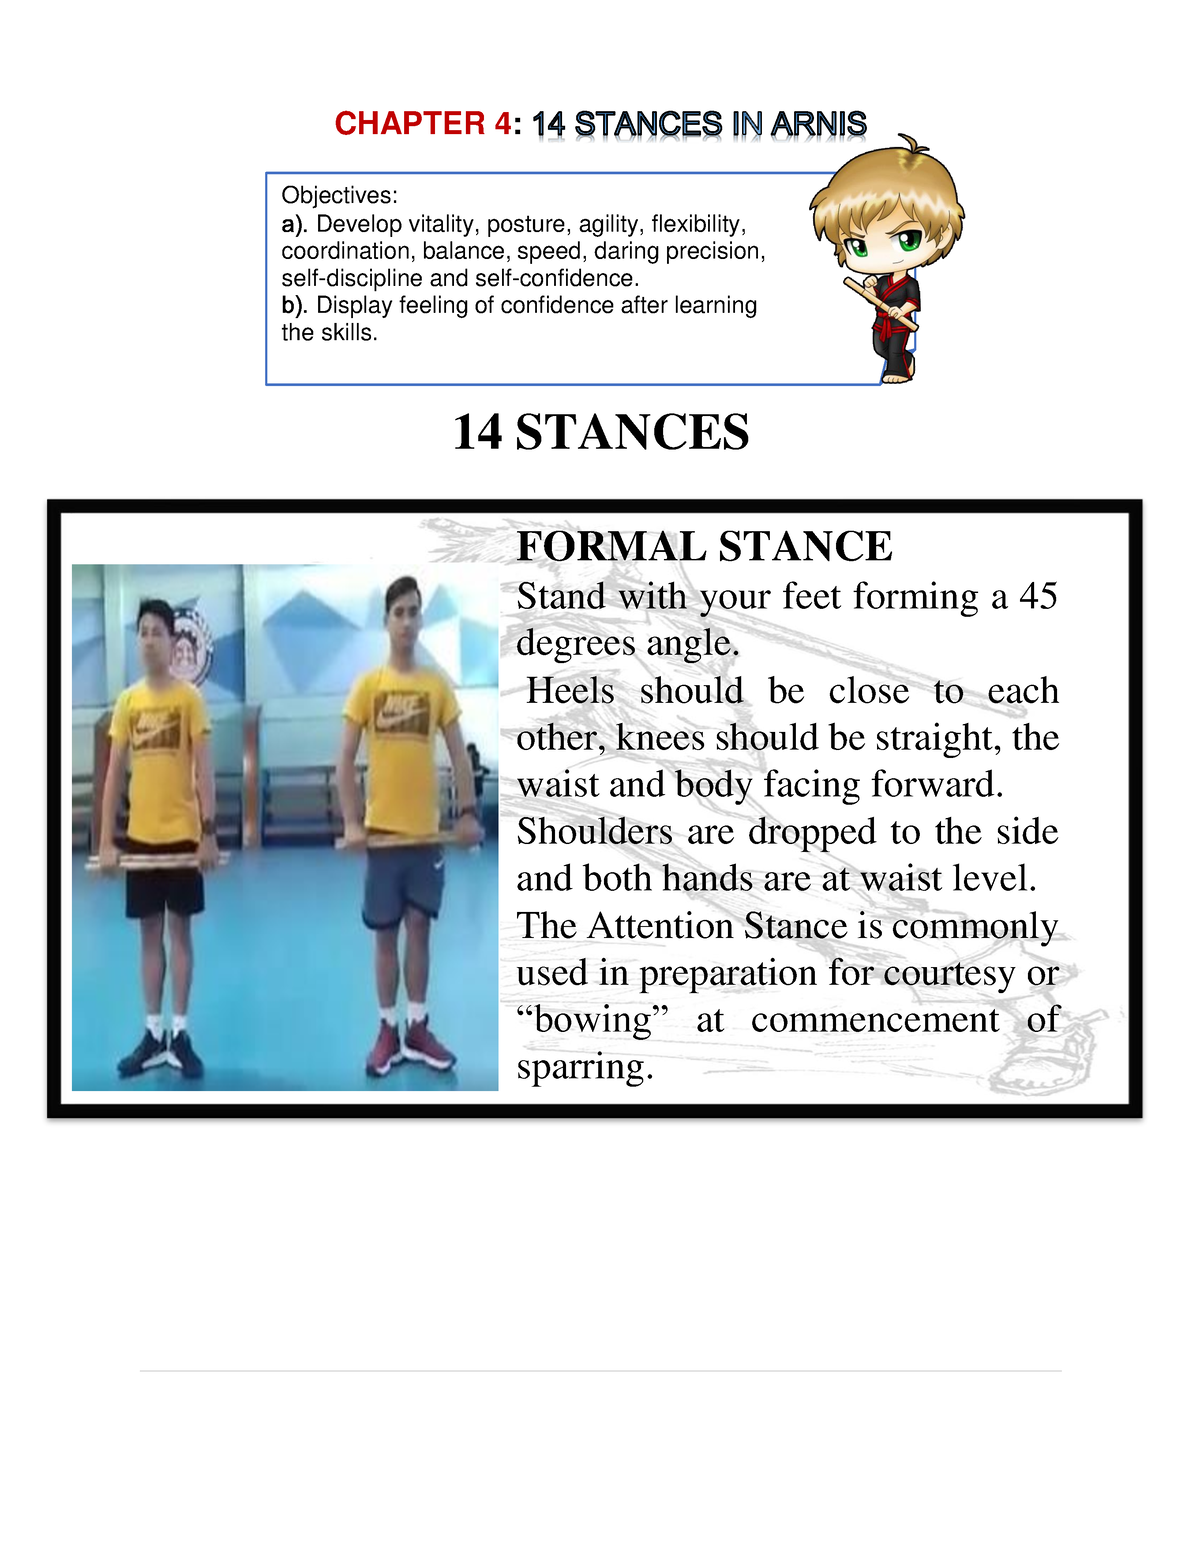 make an essay about 14 stances